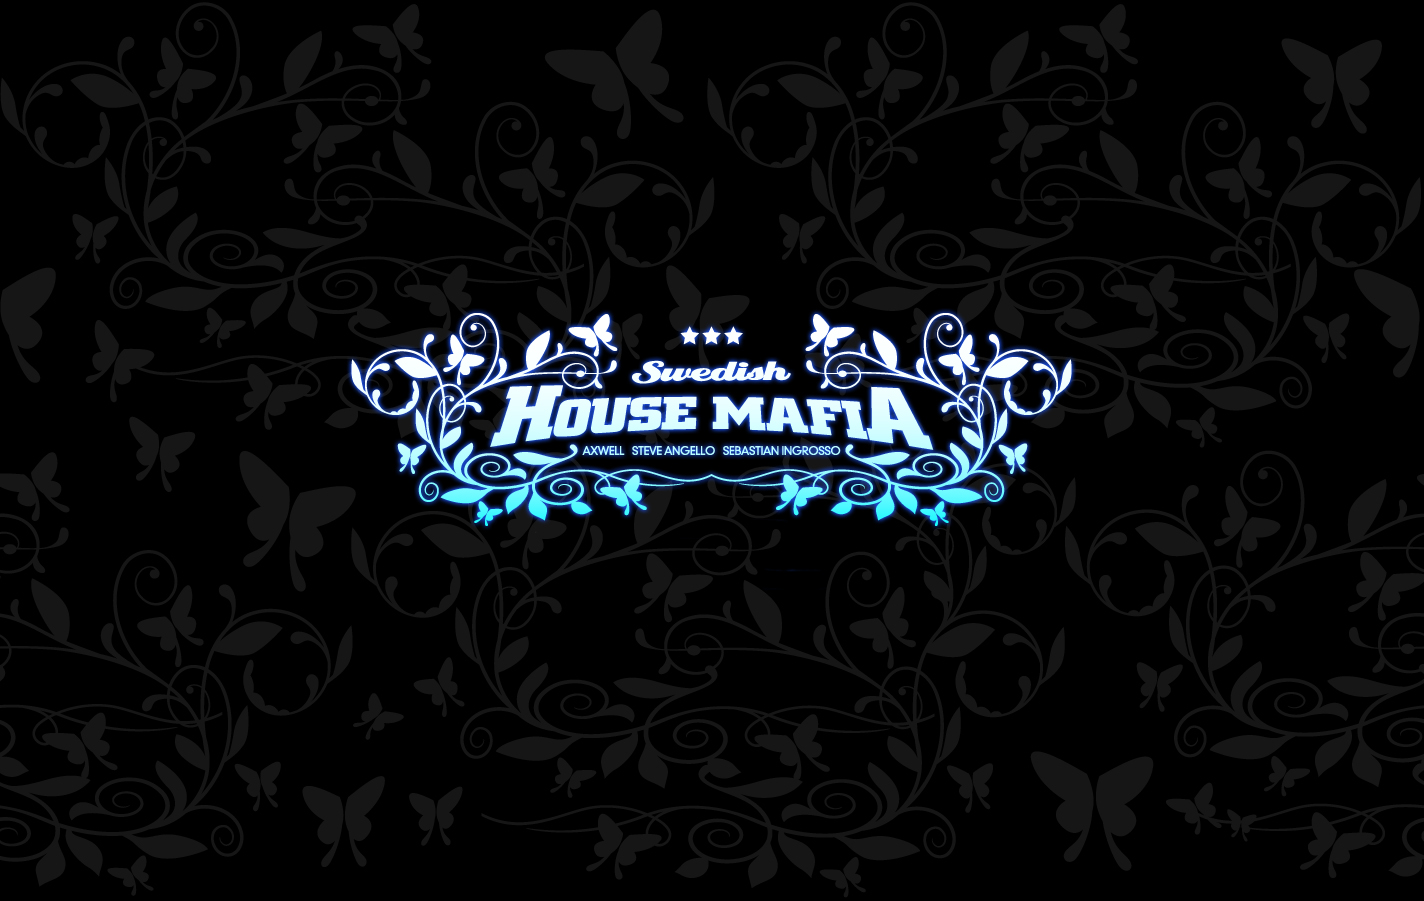 Download this Swedish House Mafia Wallpaper picture